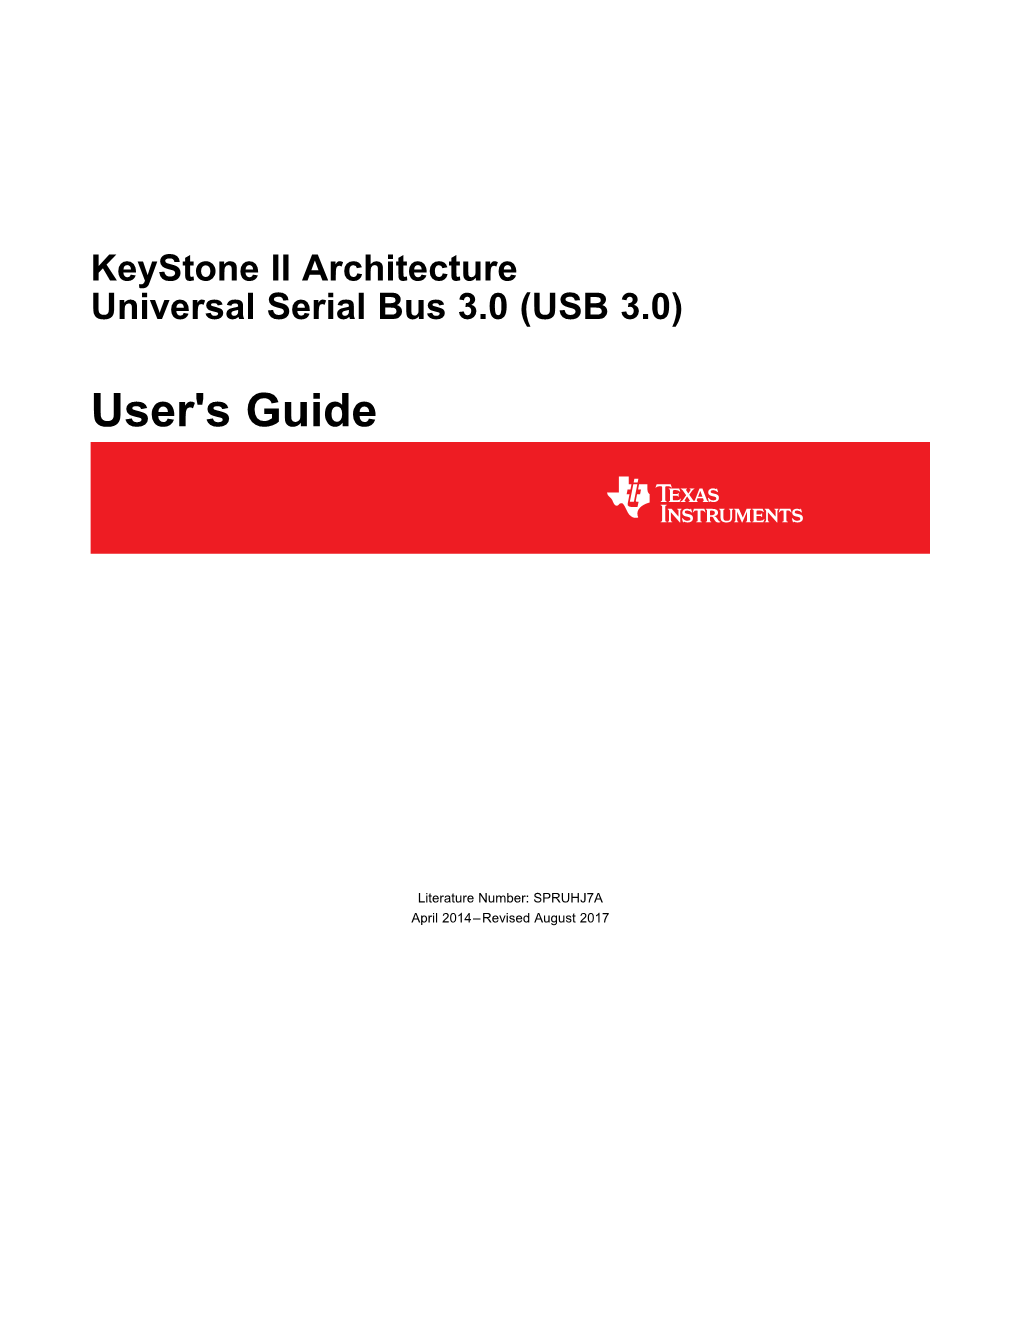 Keystone II Architecture Universal Serial Bus 3.0 (USB 3.0) (Rev. A)